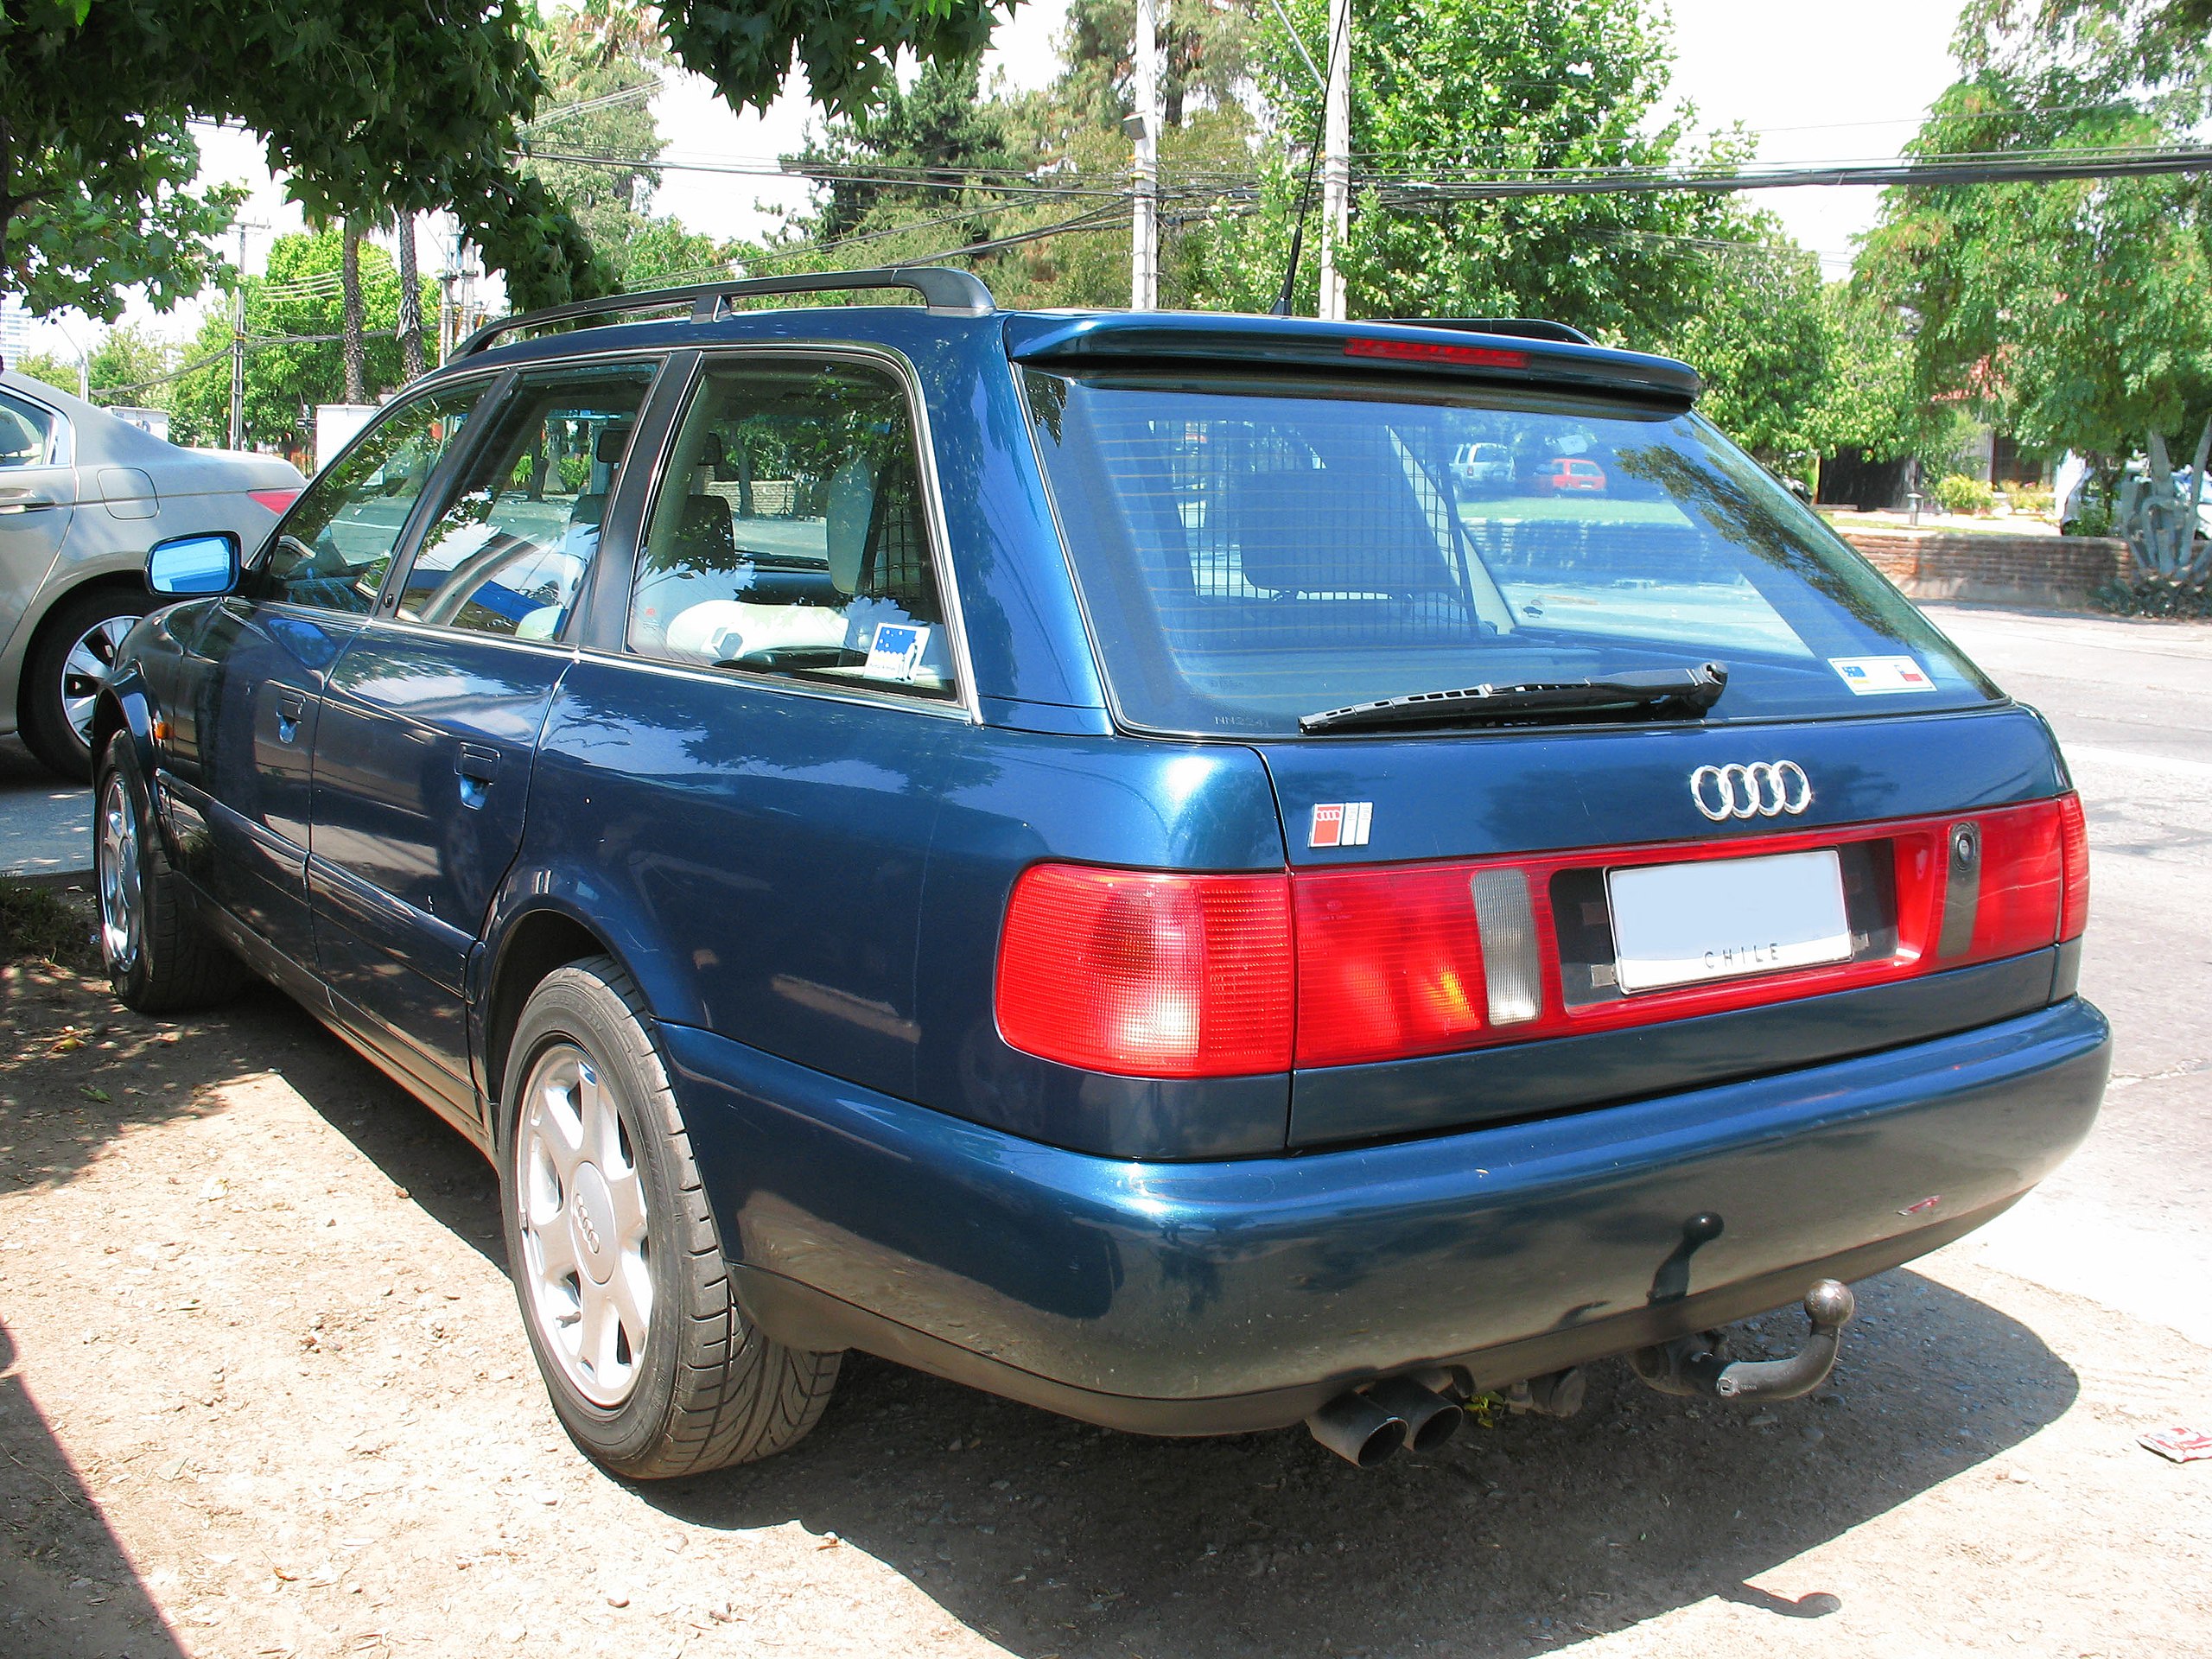 Audi S6 - Wikipedia